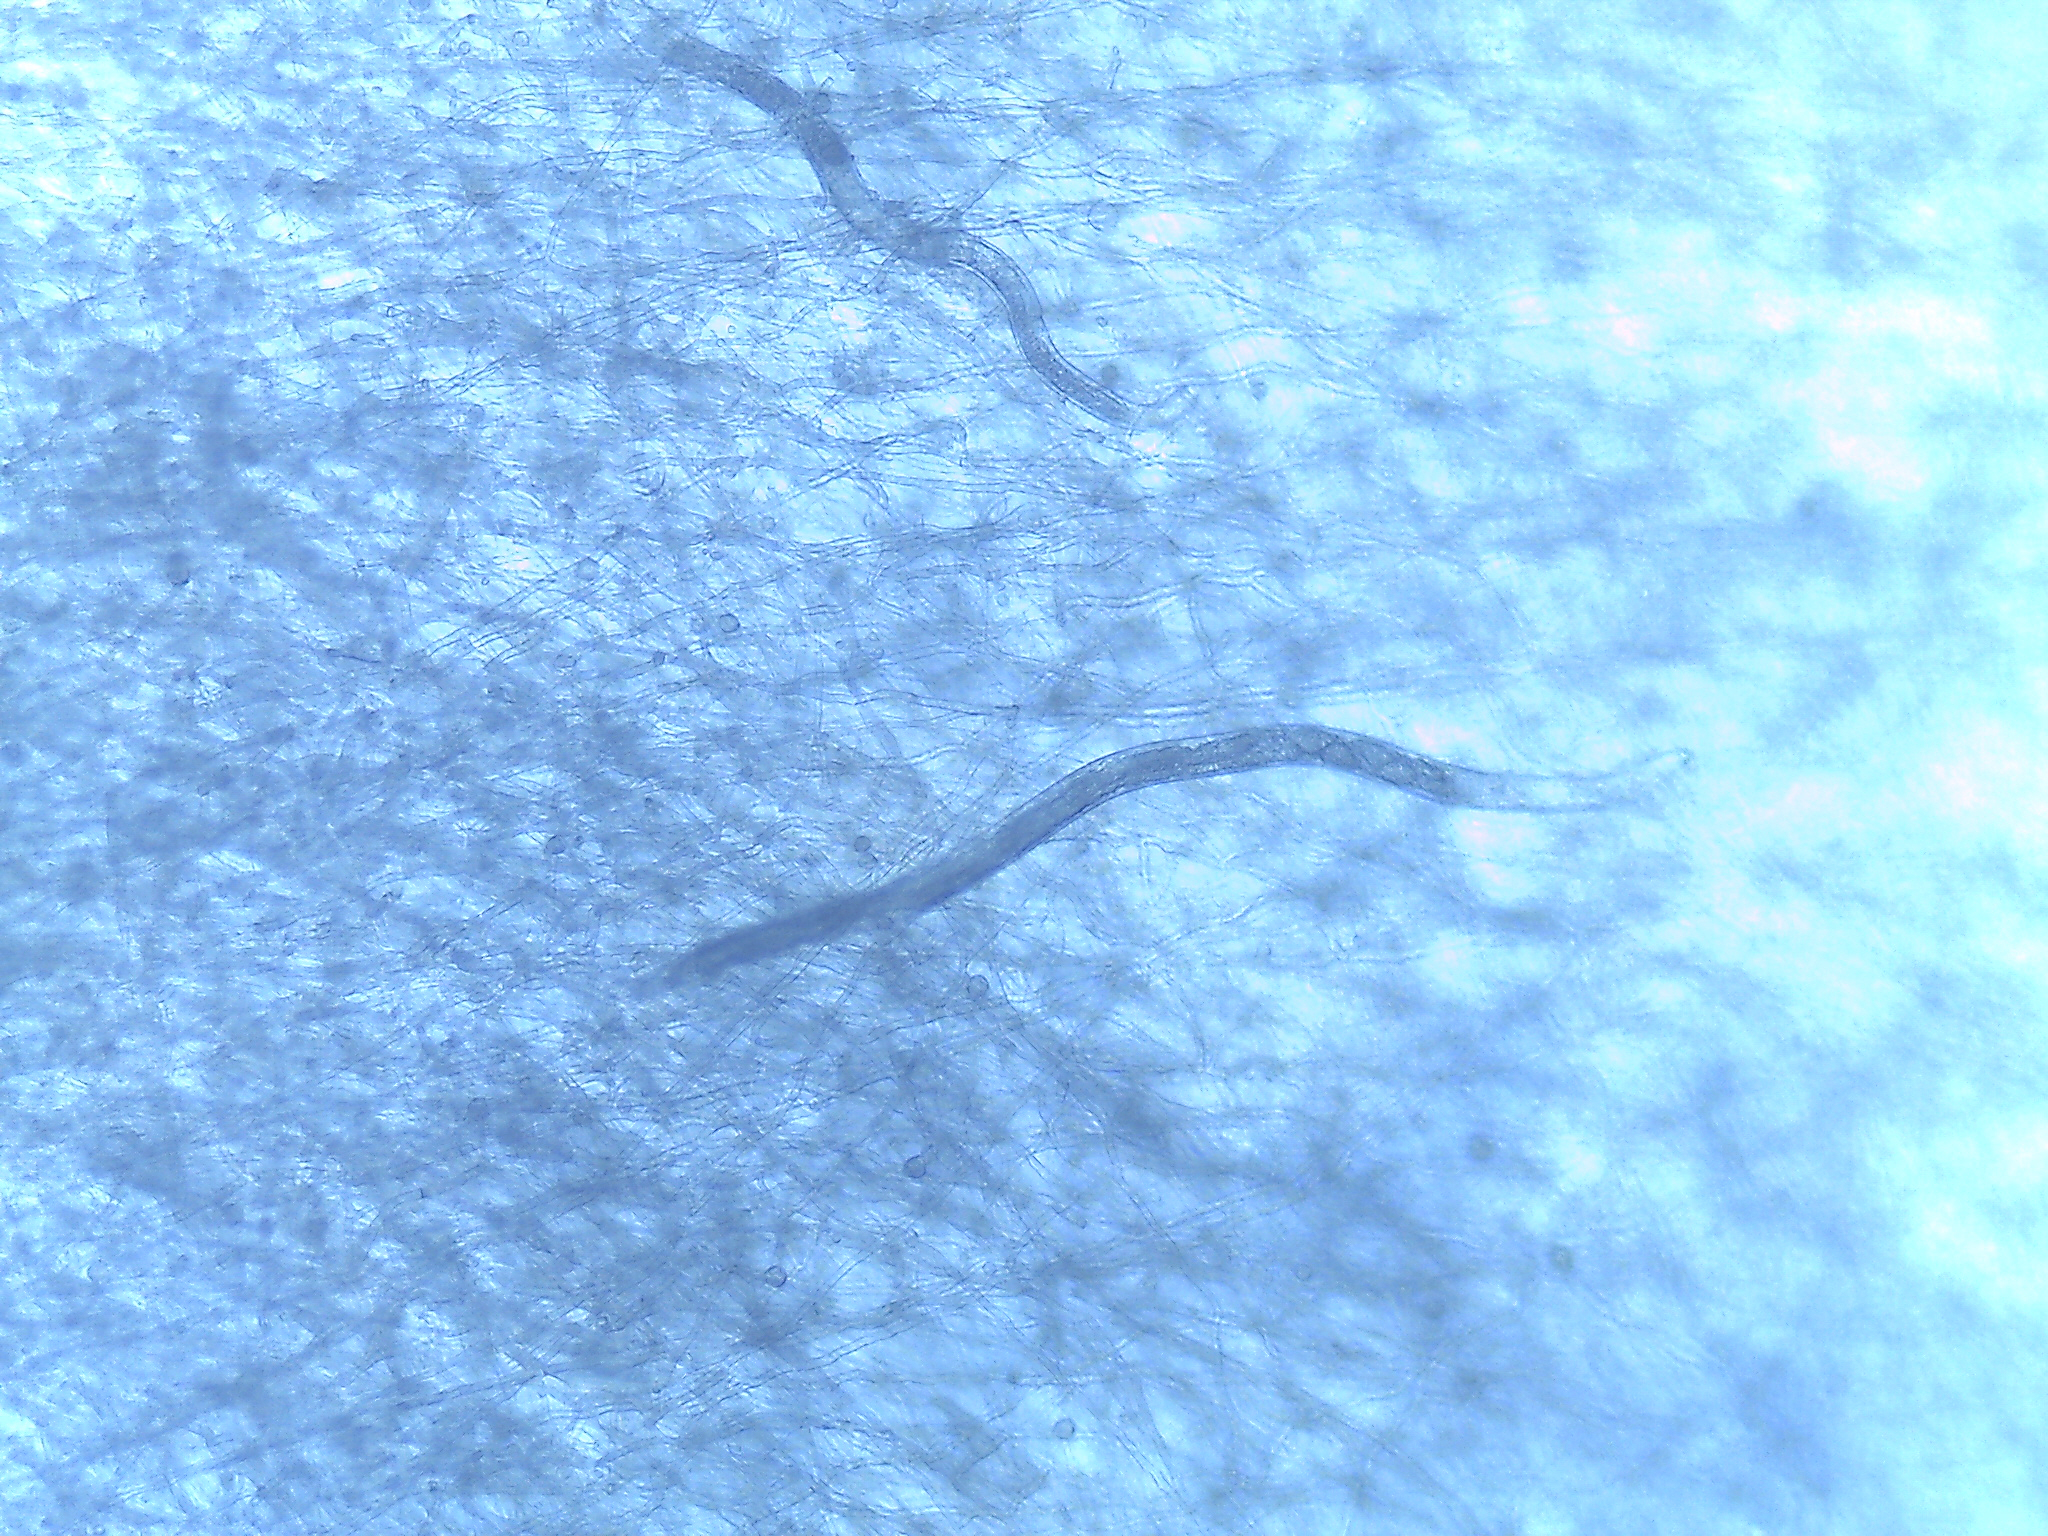 Aphelenchus avenae (a nematode) on Mortierella hyphae